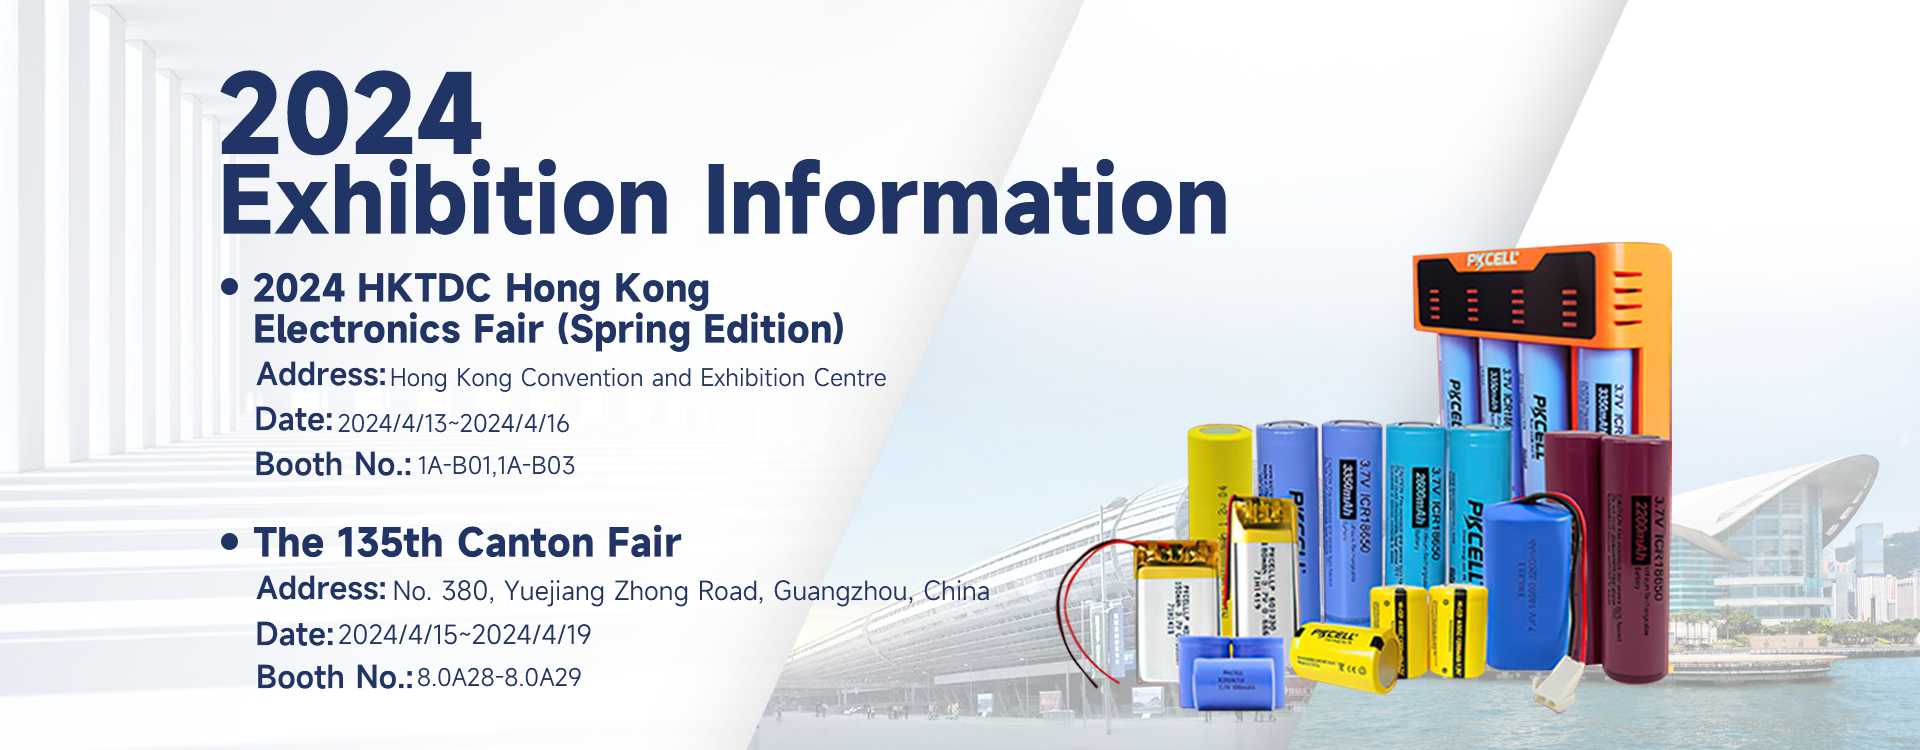 PKCELL Invitation for HKTDC Electronics Fair and Canton Fair-2024